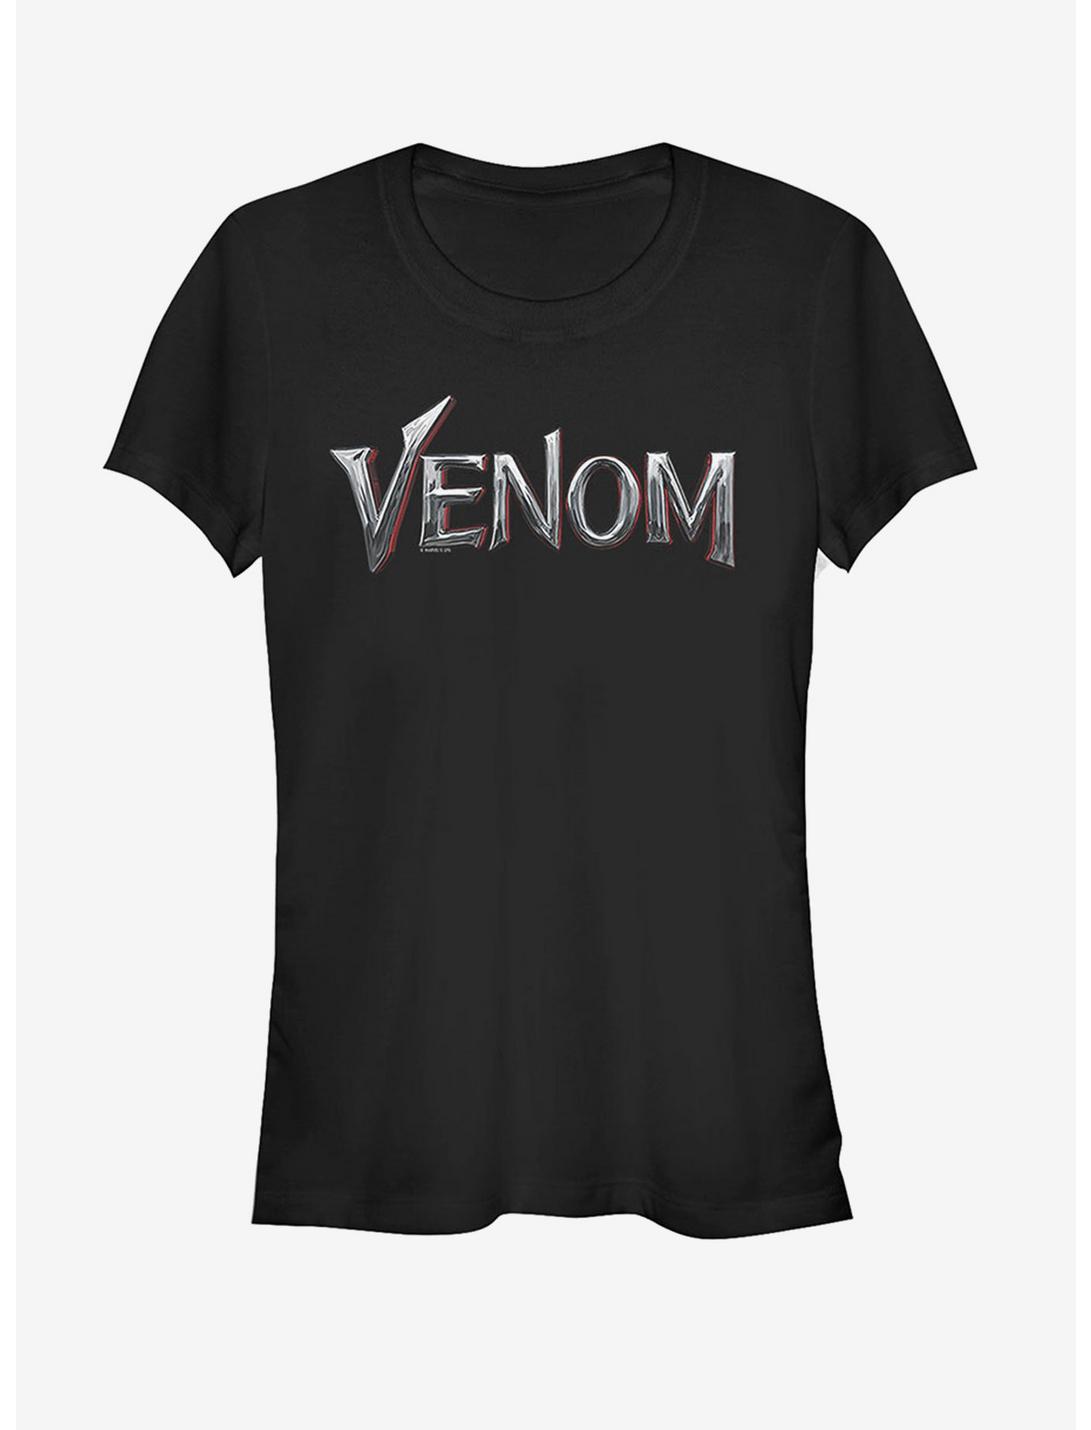 Marvel Venom Film Metallic Logo Girls T-Shirt, BLACK, hi-res